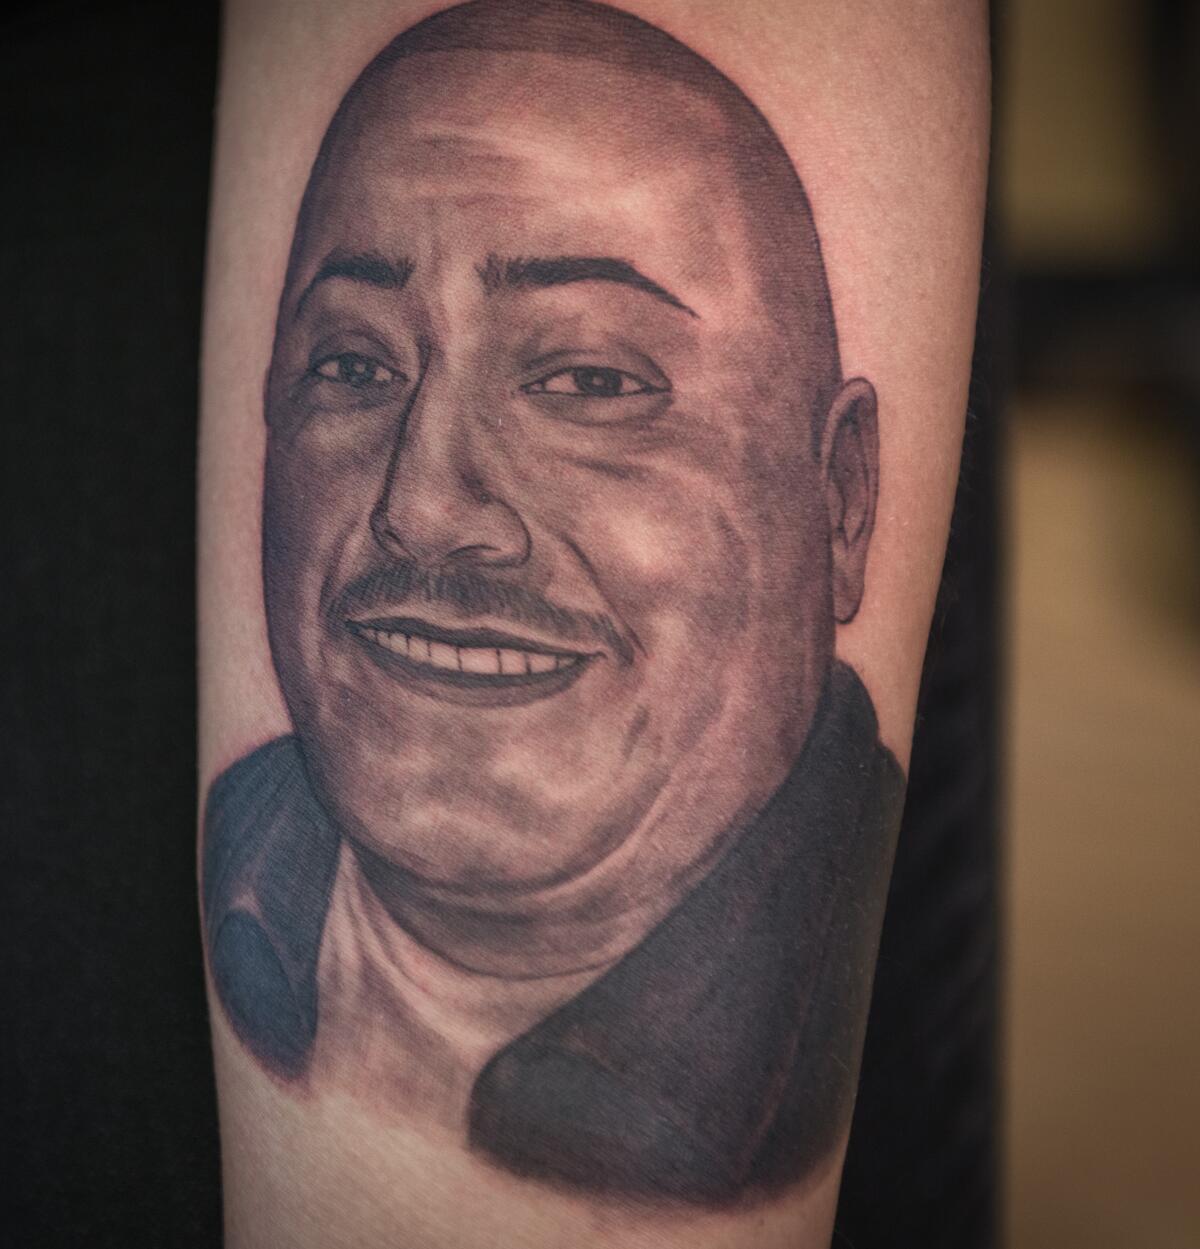 Tattooed portrait of Philip Martin Martinez on Anita’s arm. 